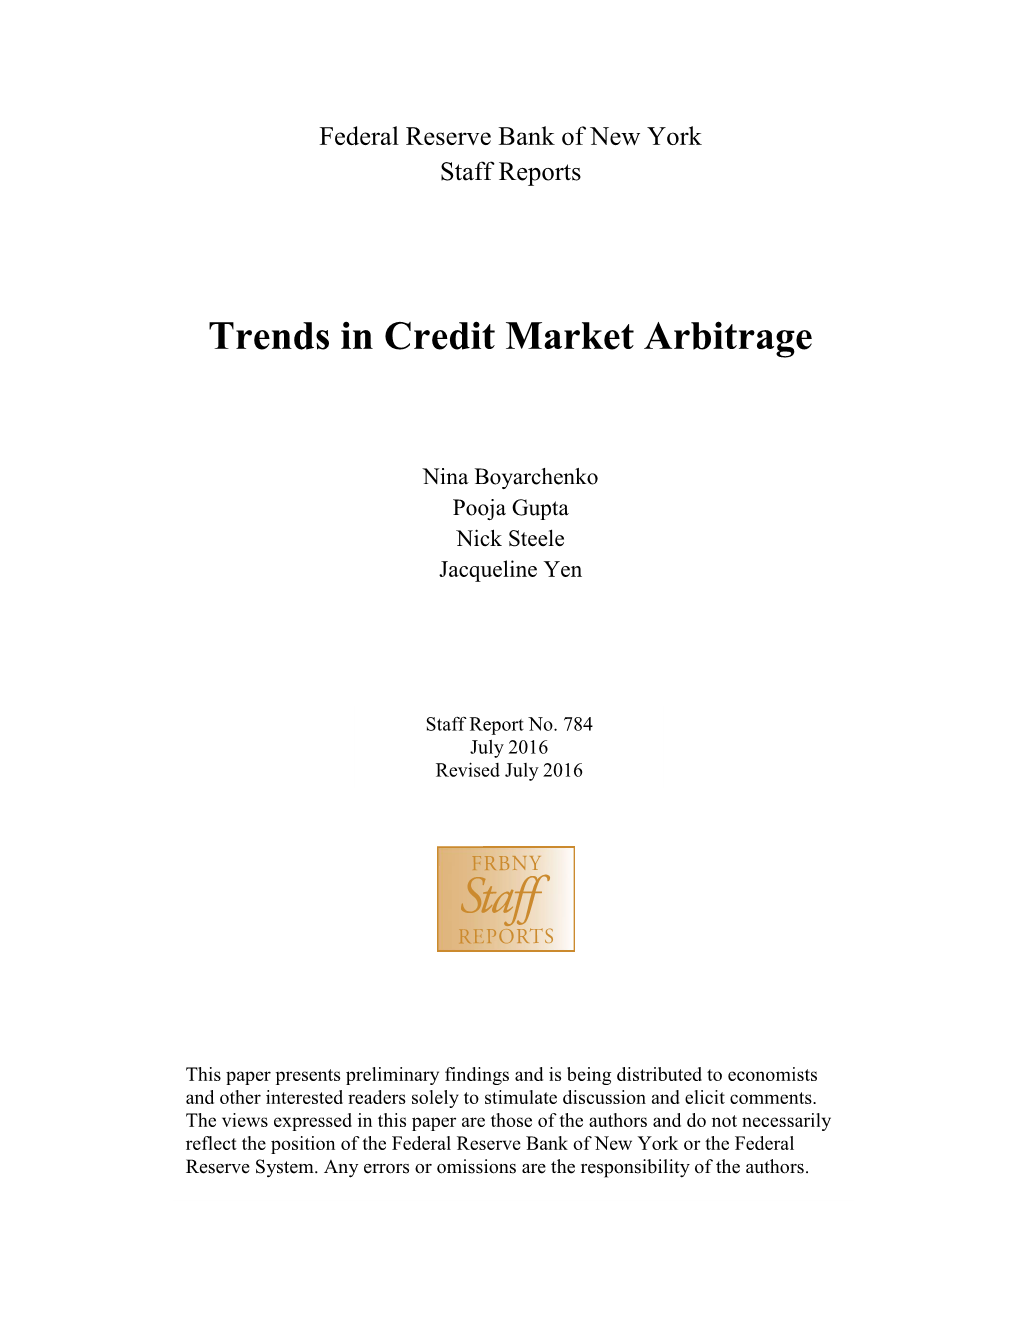 Trends in Credit Market Arbitrage